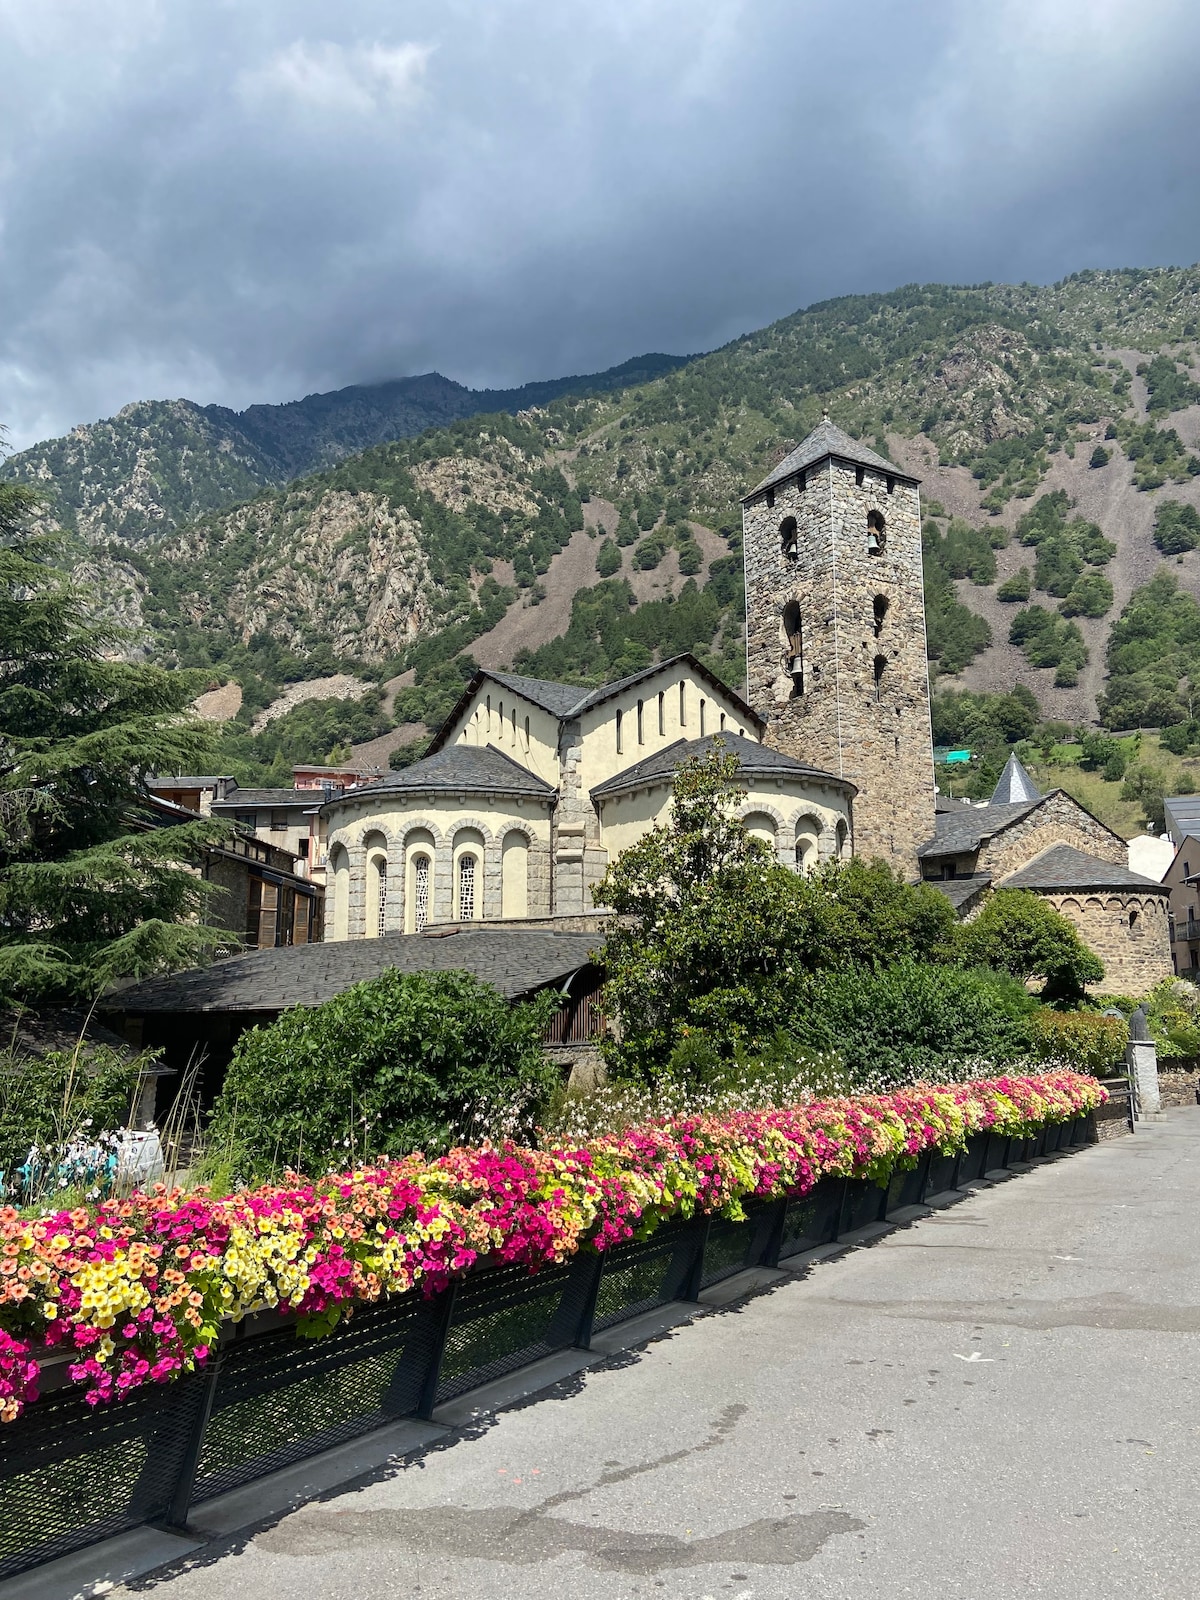 Andorra la vella